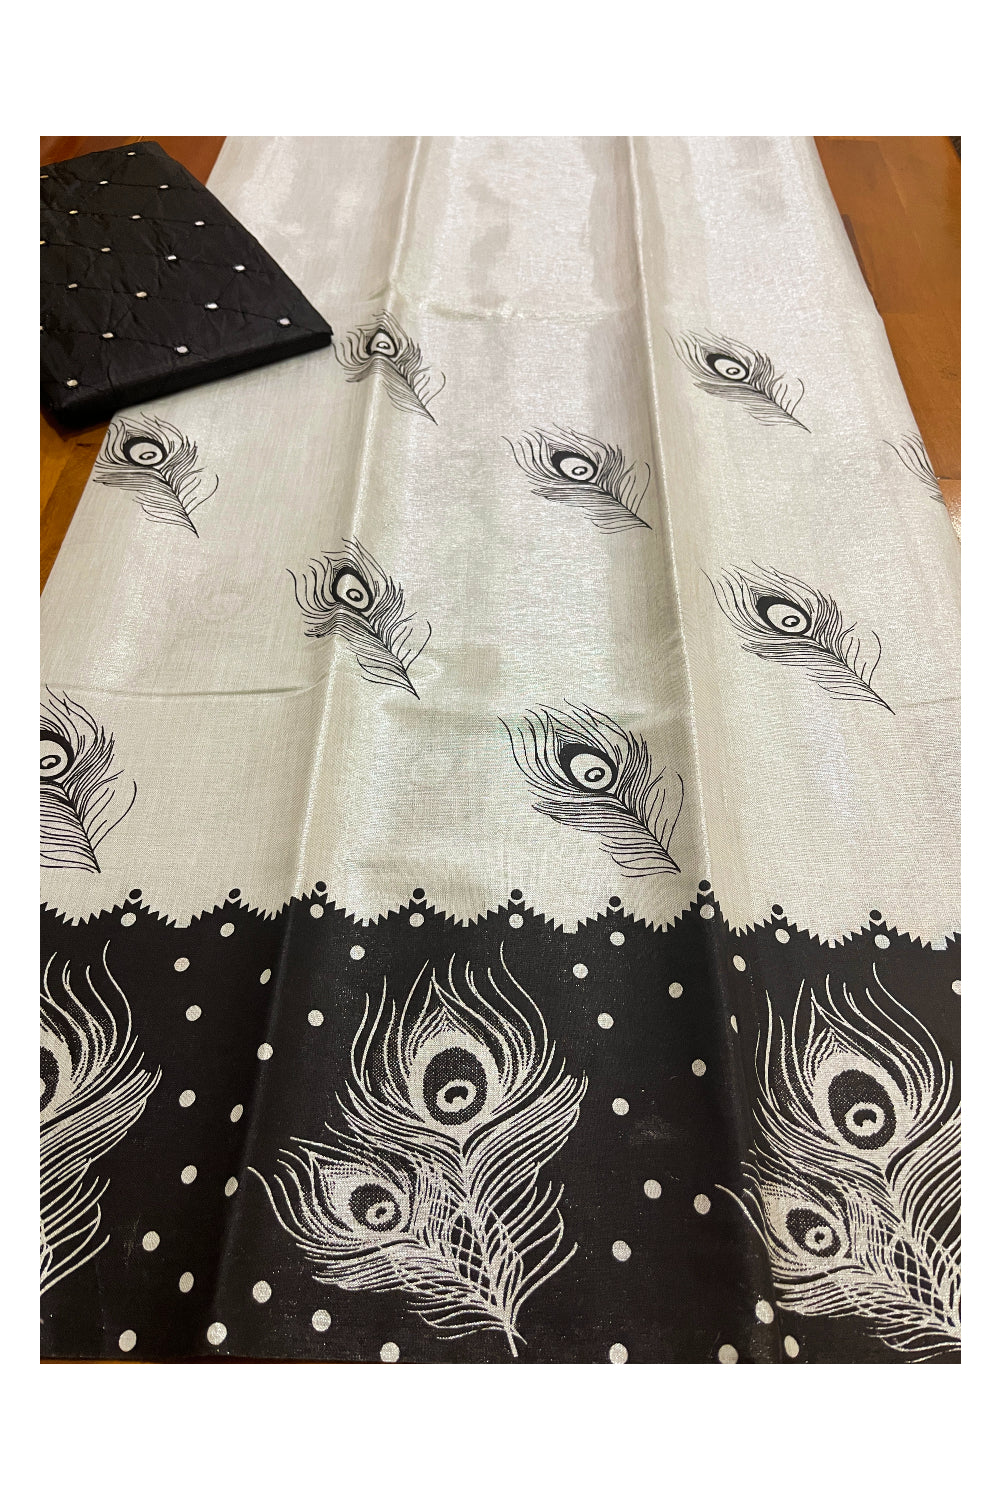 Kerala Silver Tissue Block Printed Pavada and Black Designer Blouse Material for Kids/Girls 4.3 Meters